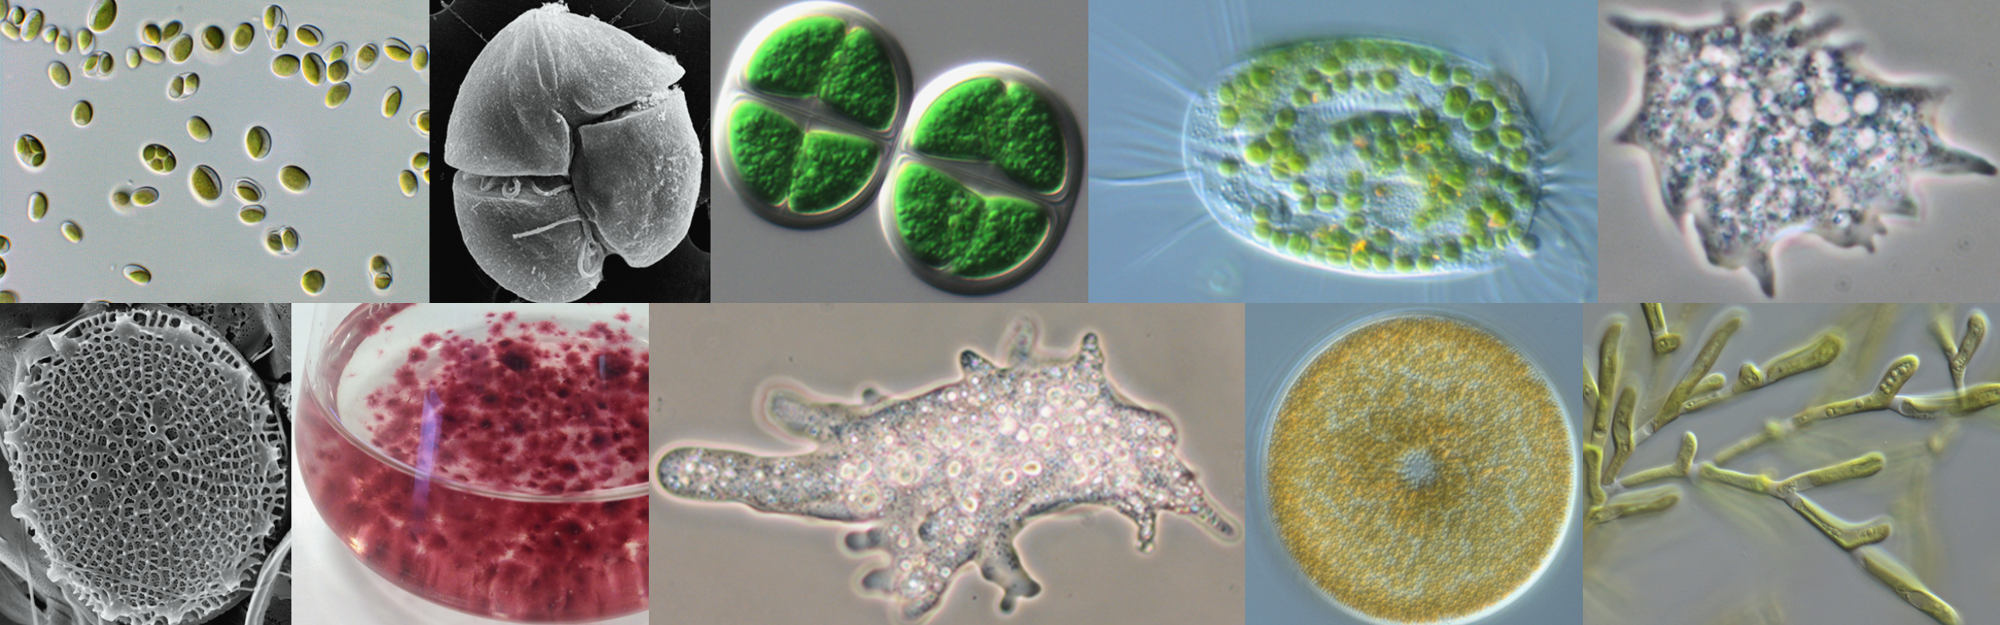 Over 2500 strains of algae, protozoa, cyanobacteria & small seaweeds